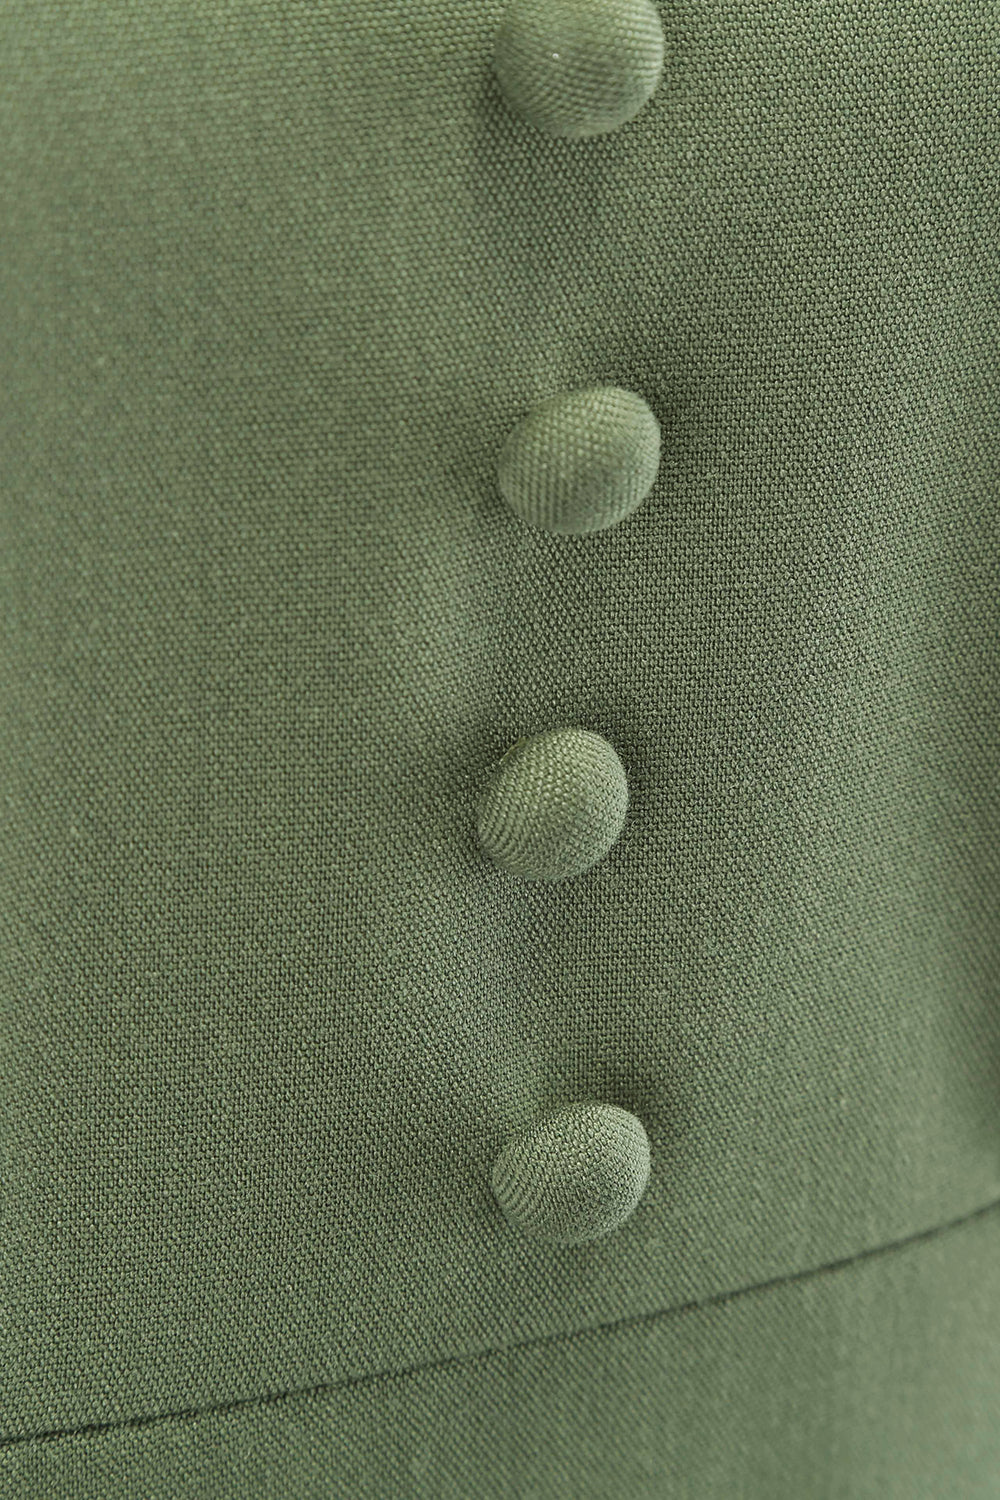 Green V-Neck Long Sleeves Vintage Swing Dress